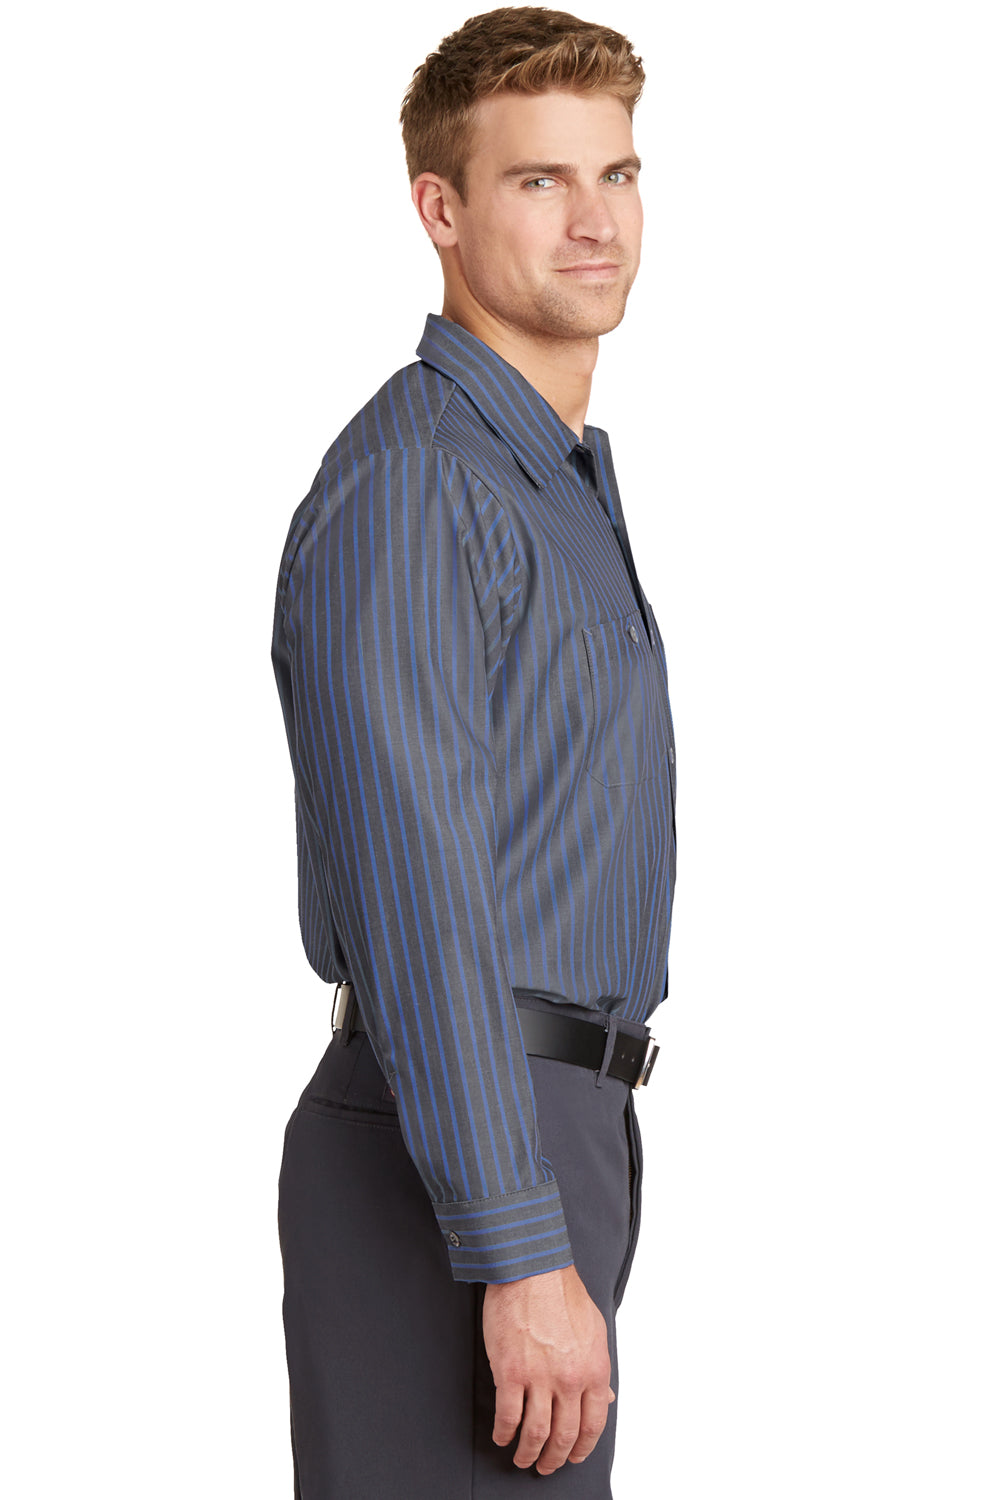 Red Kap CS10 Mens Industrial Moisture Wicking Long Sleeve Button Down Shirt w/ Double Pockets Grey/Blue Side